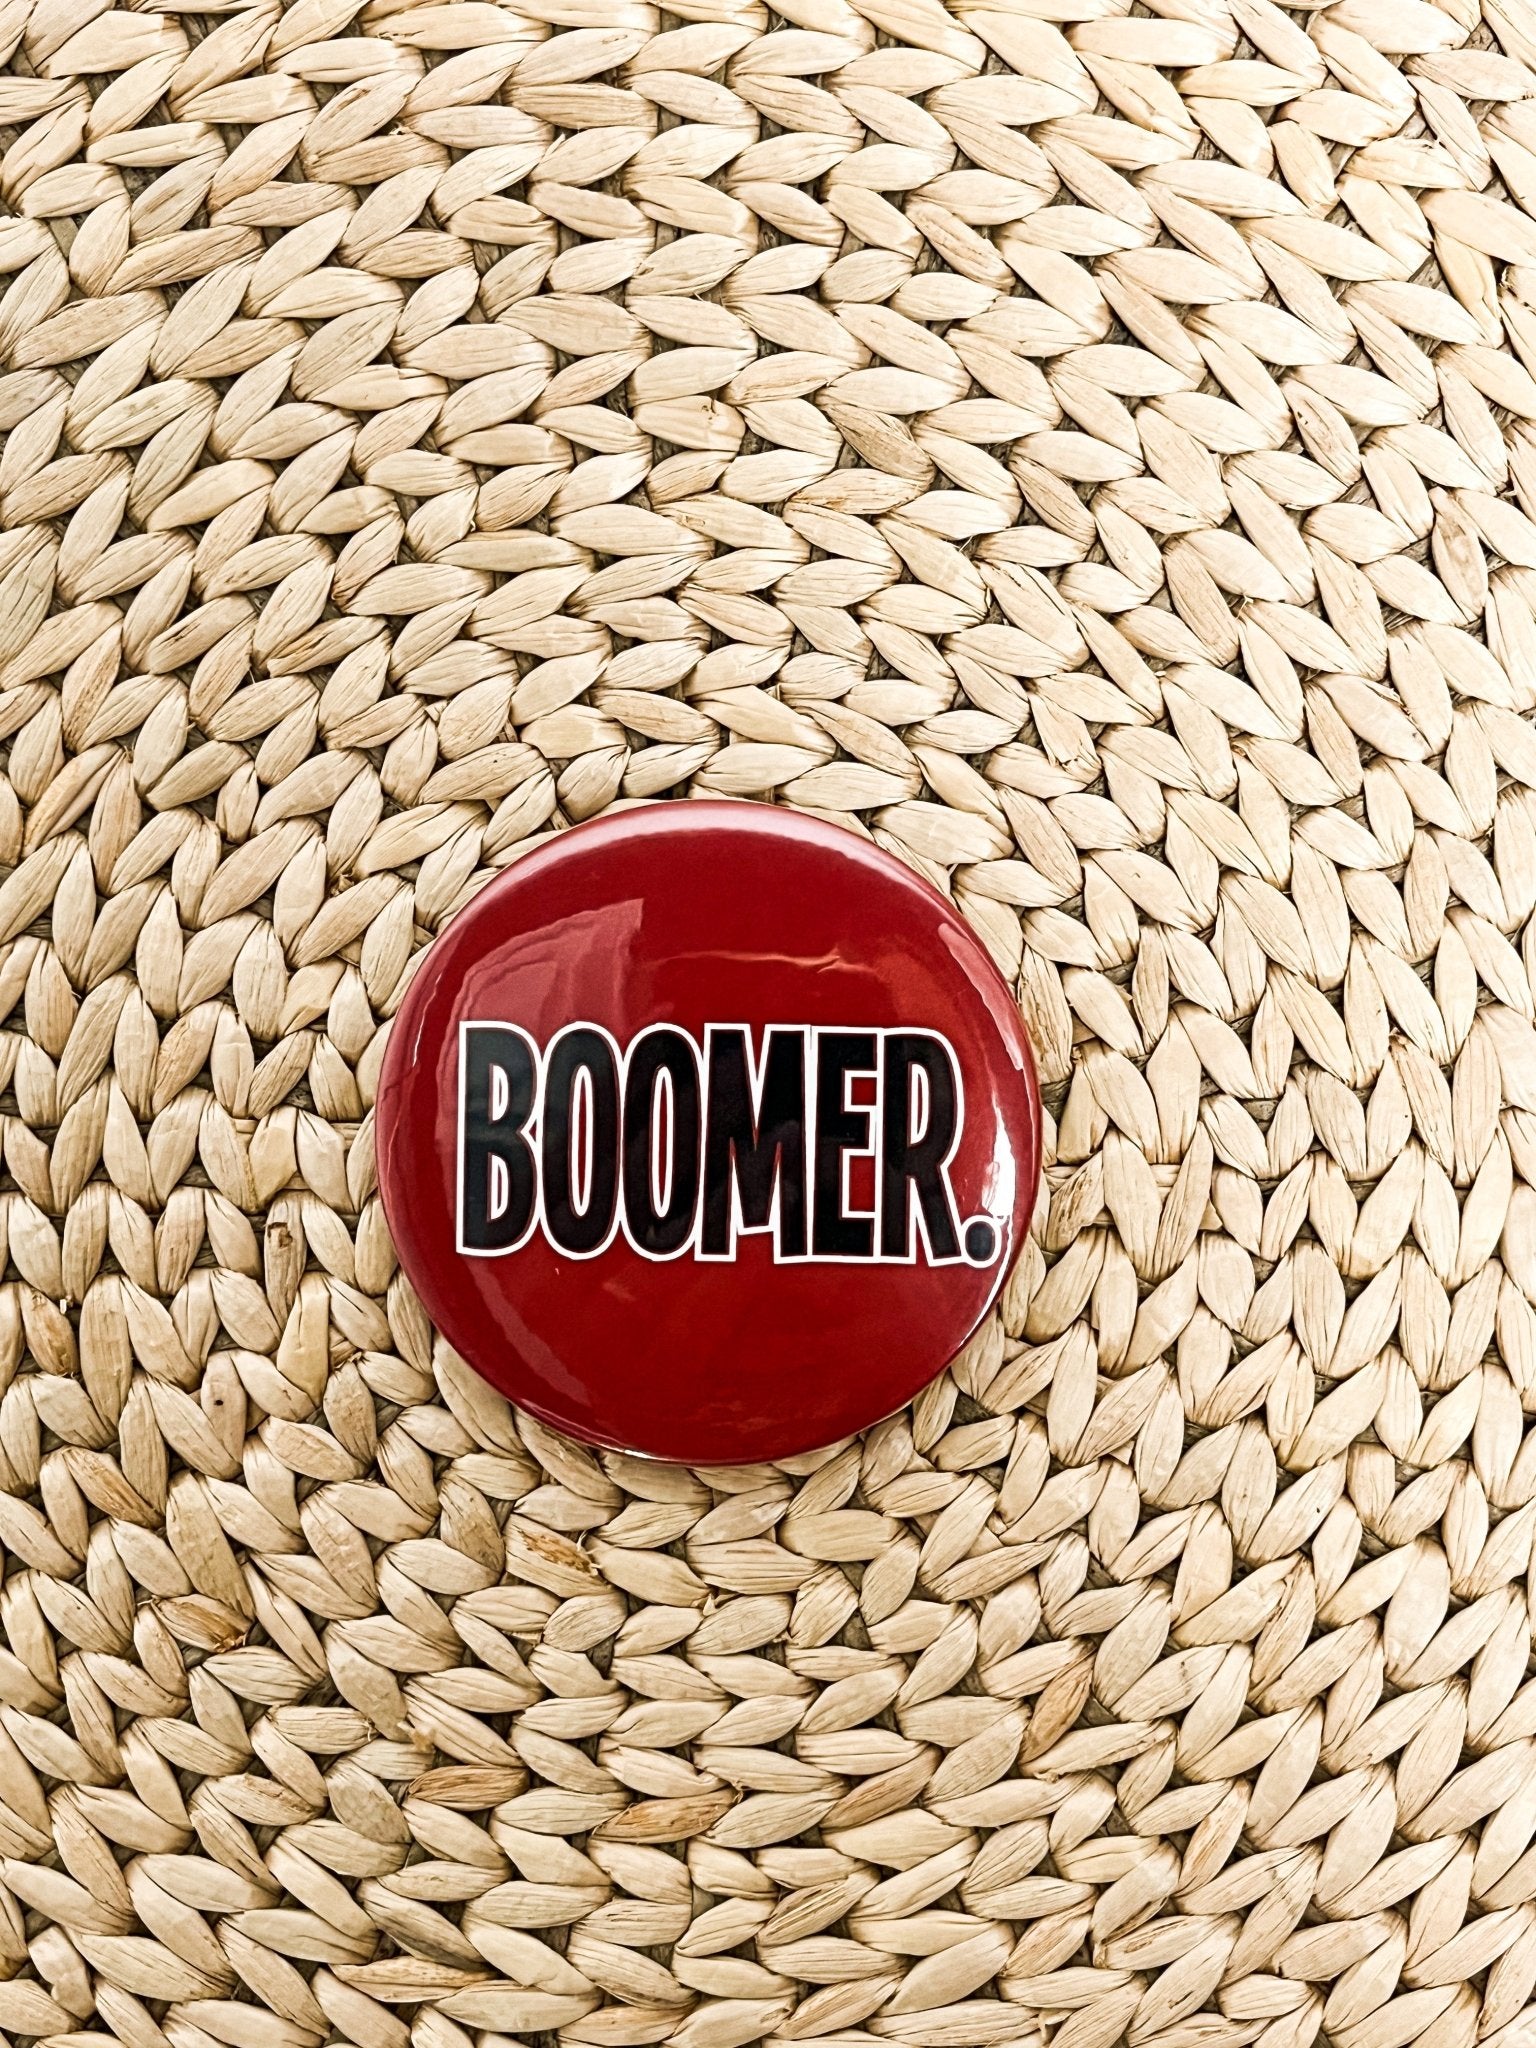 BOOMER. 2.25 inch game day button crimson